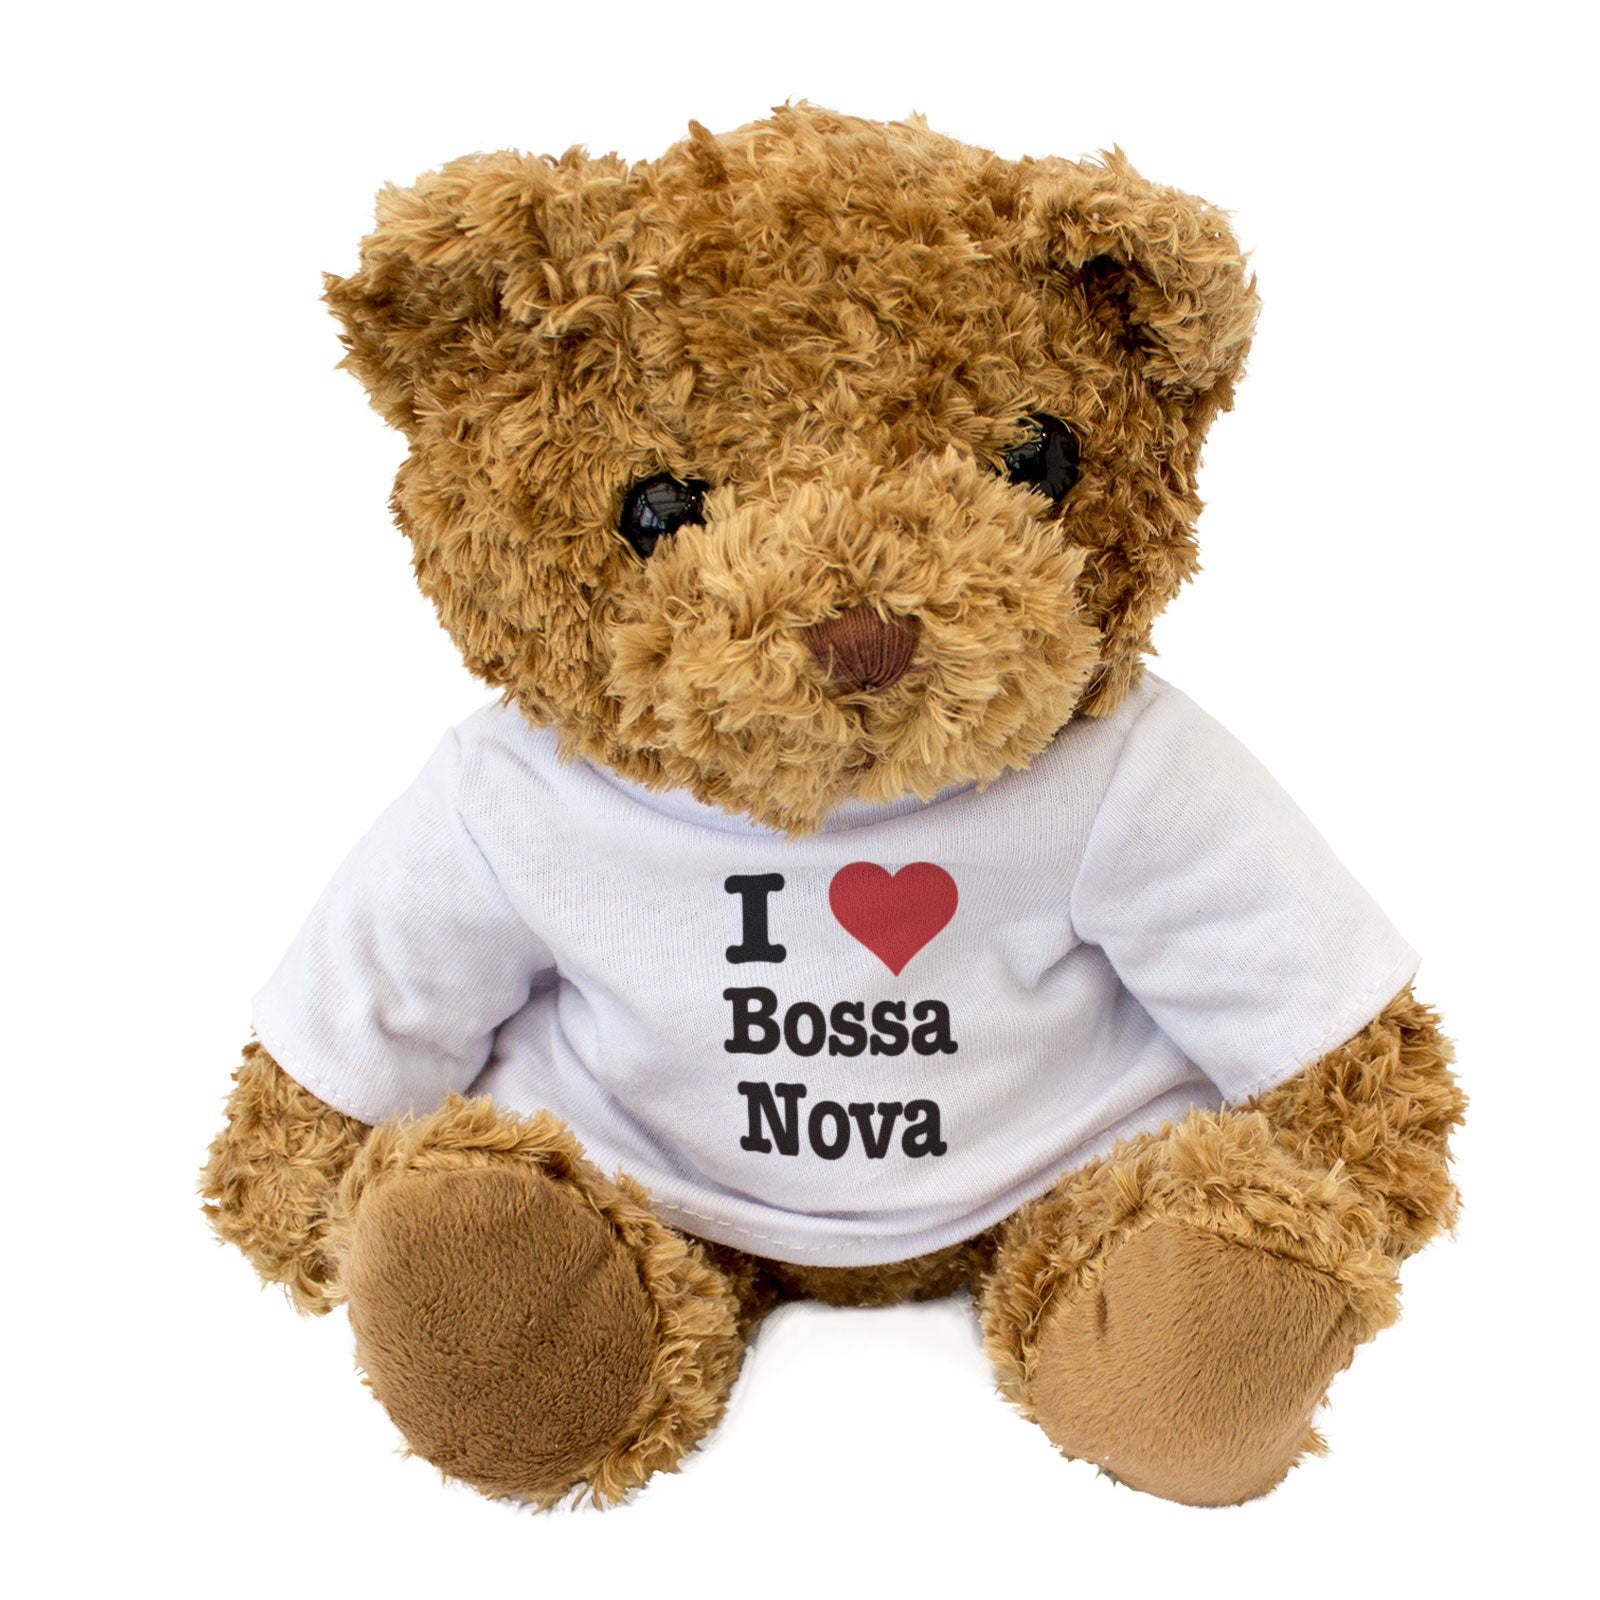 I Love Bossa Nova - Teddy Bear